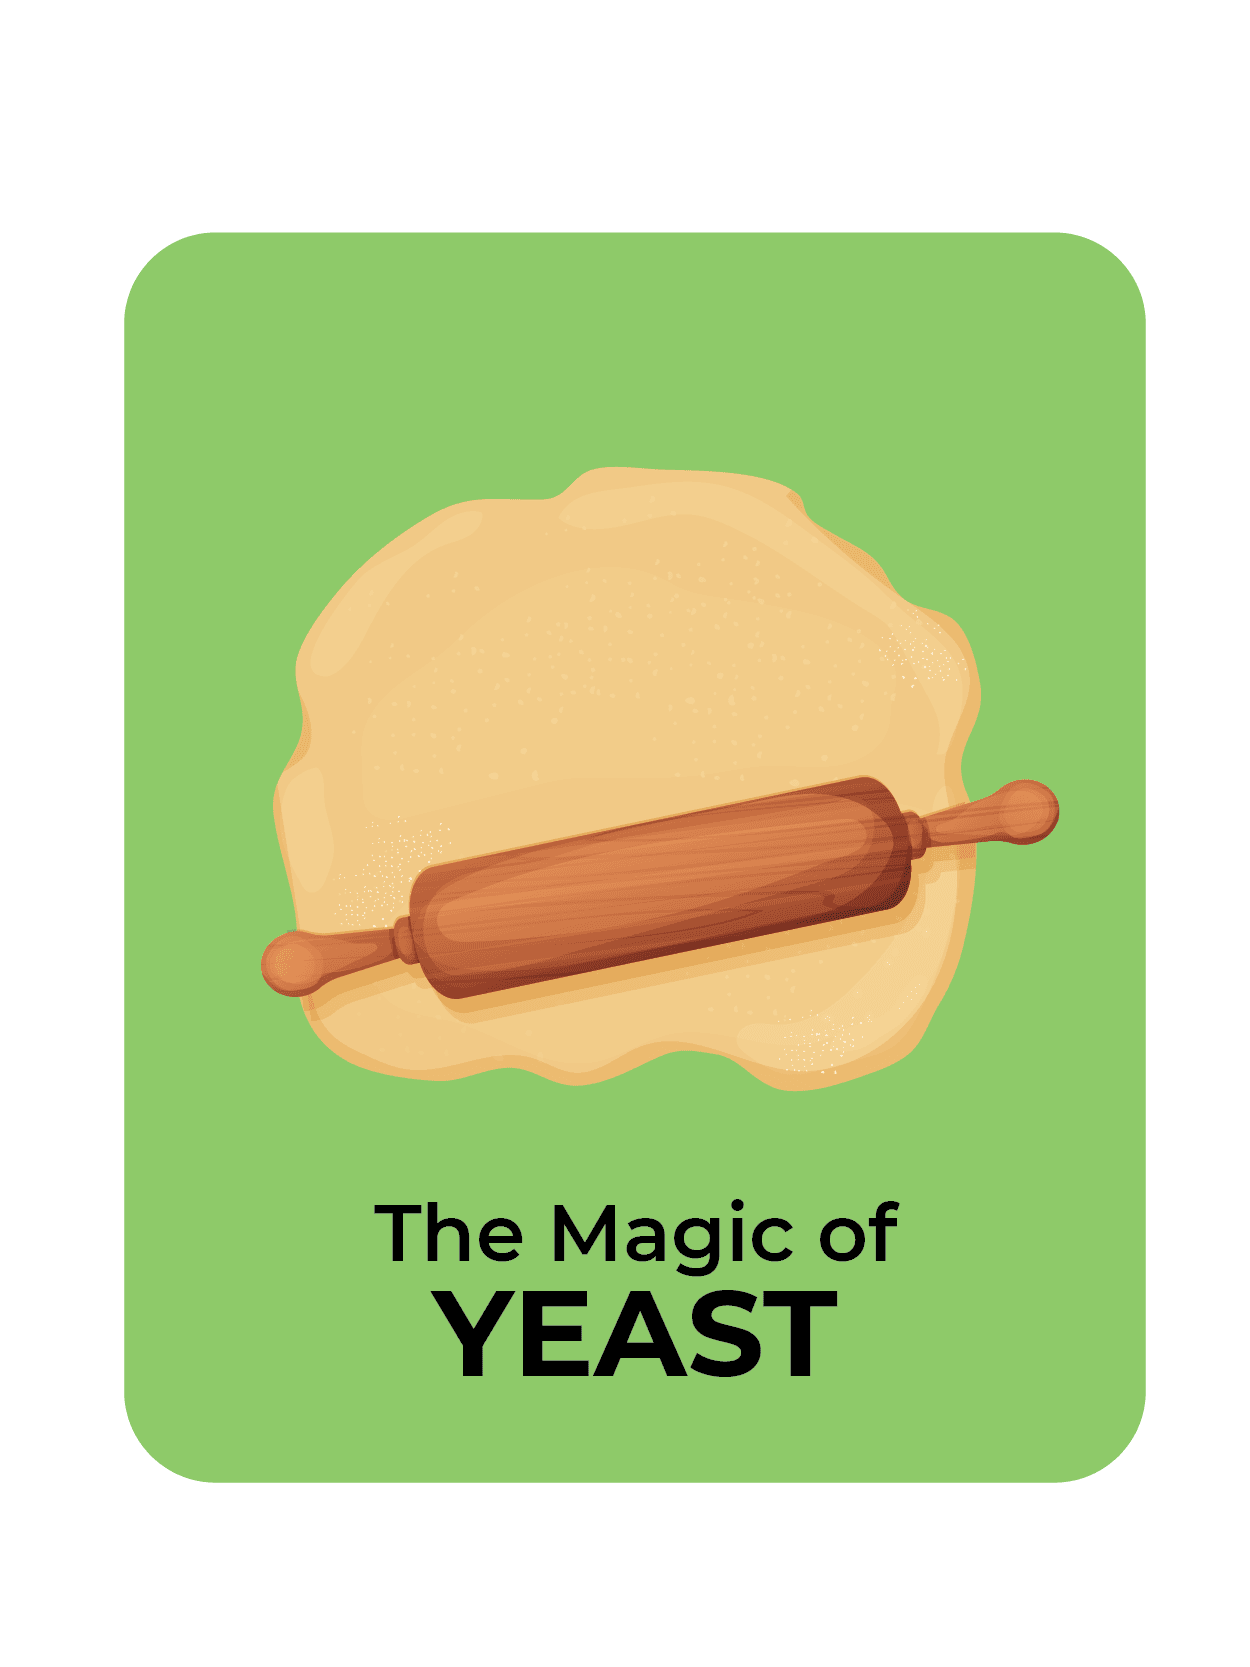 The Magic of Yeast